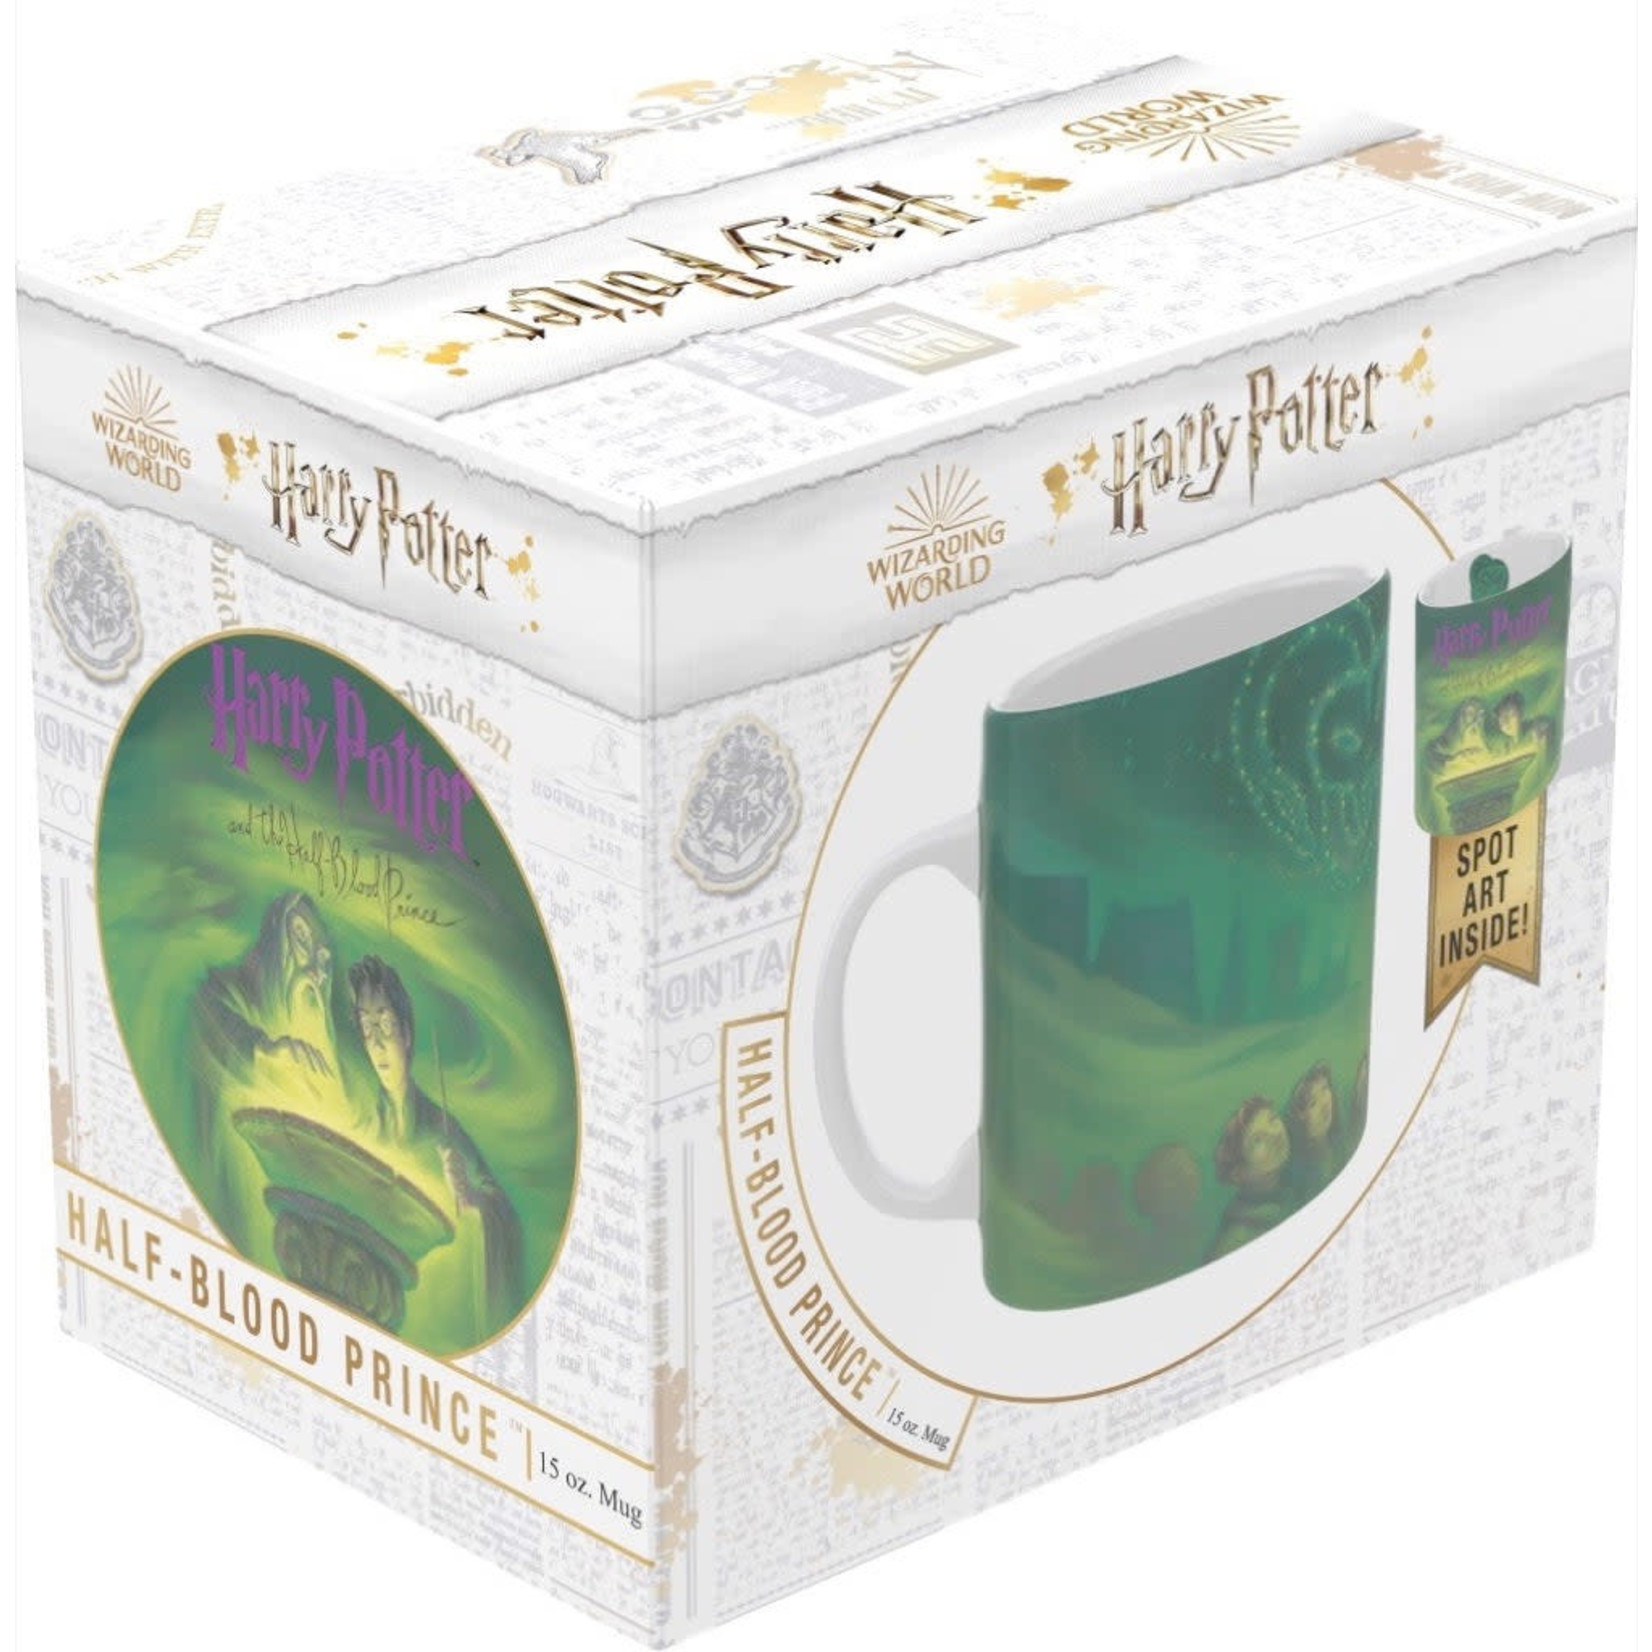 Mug - Harry Potter "Half-Blood Prince" 15 oz